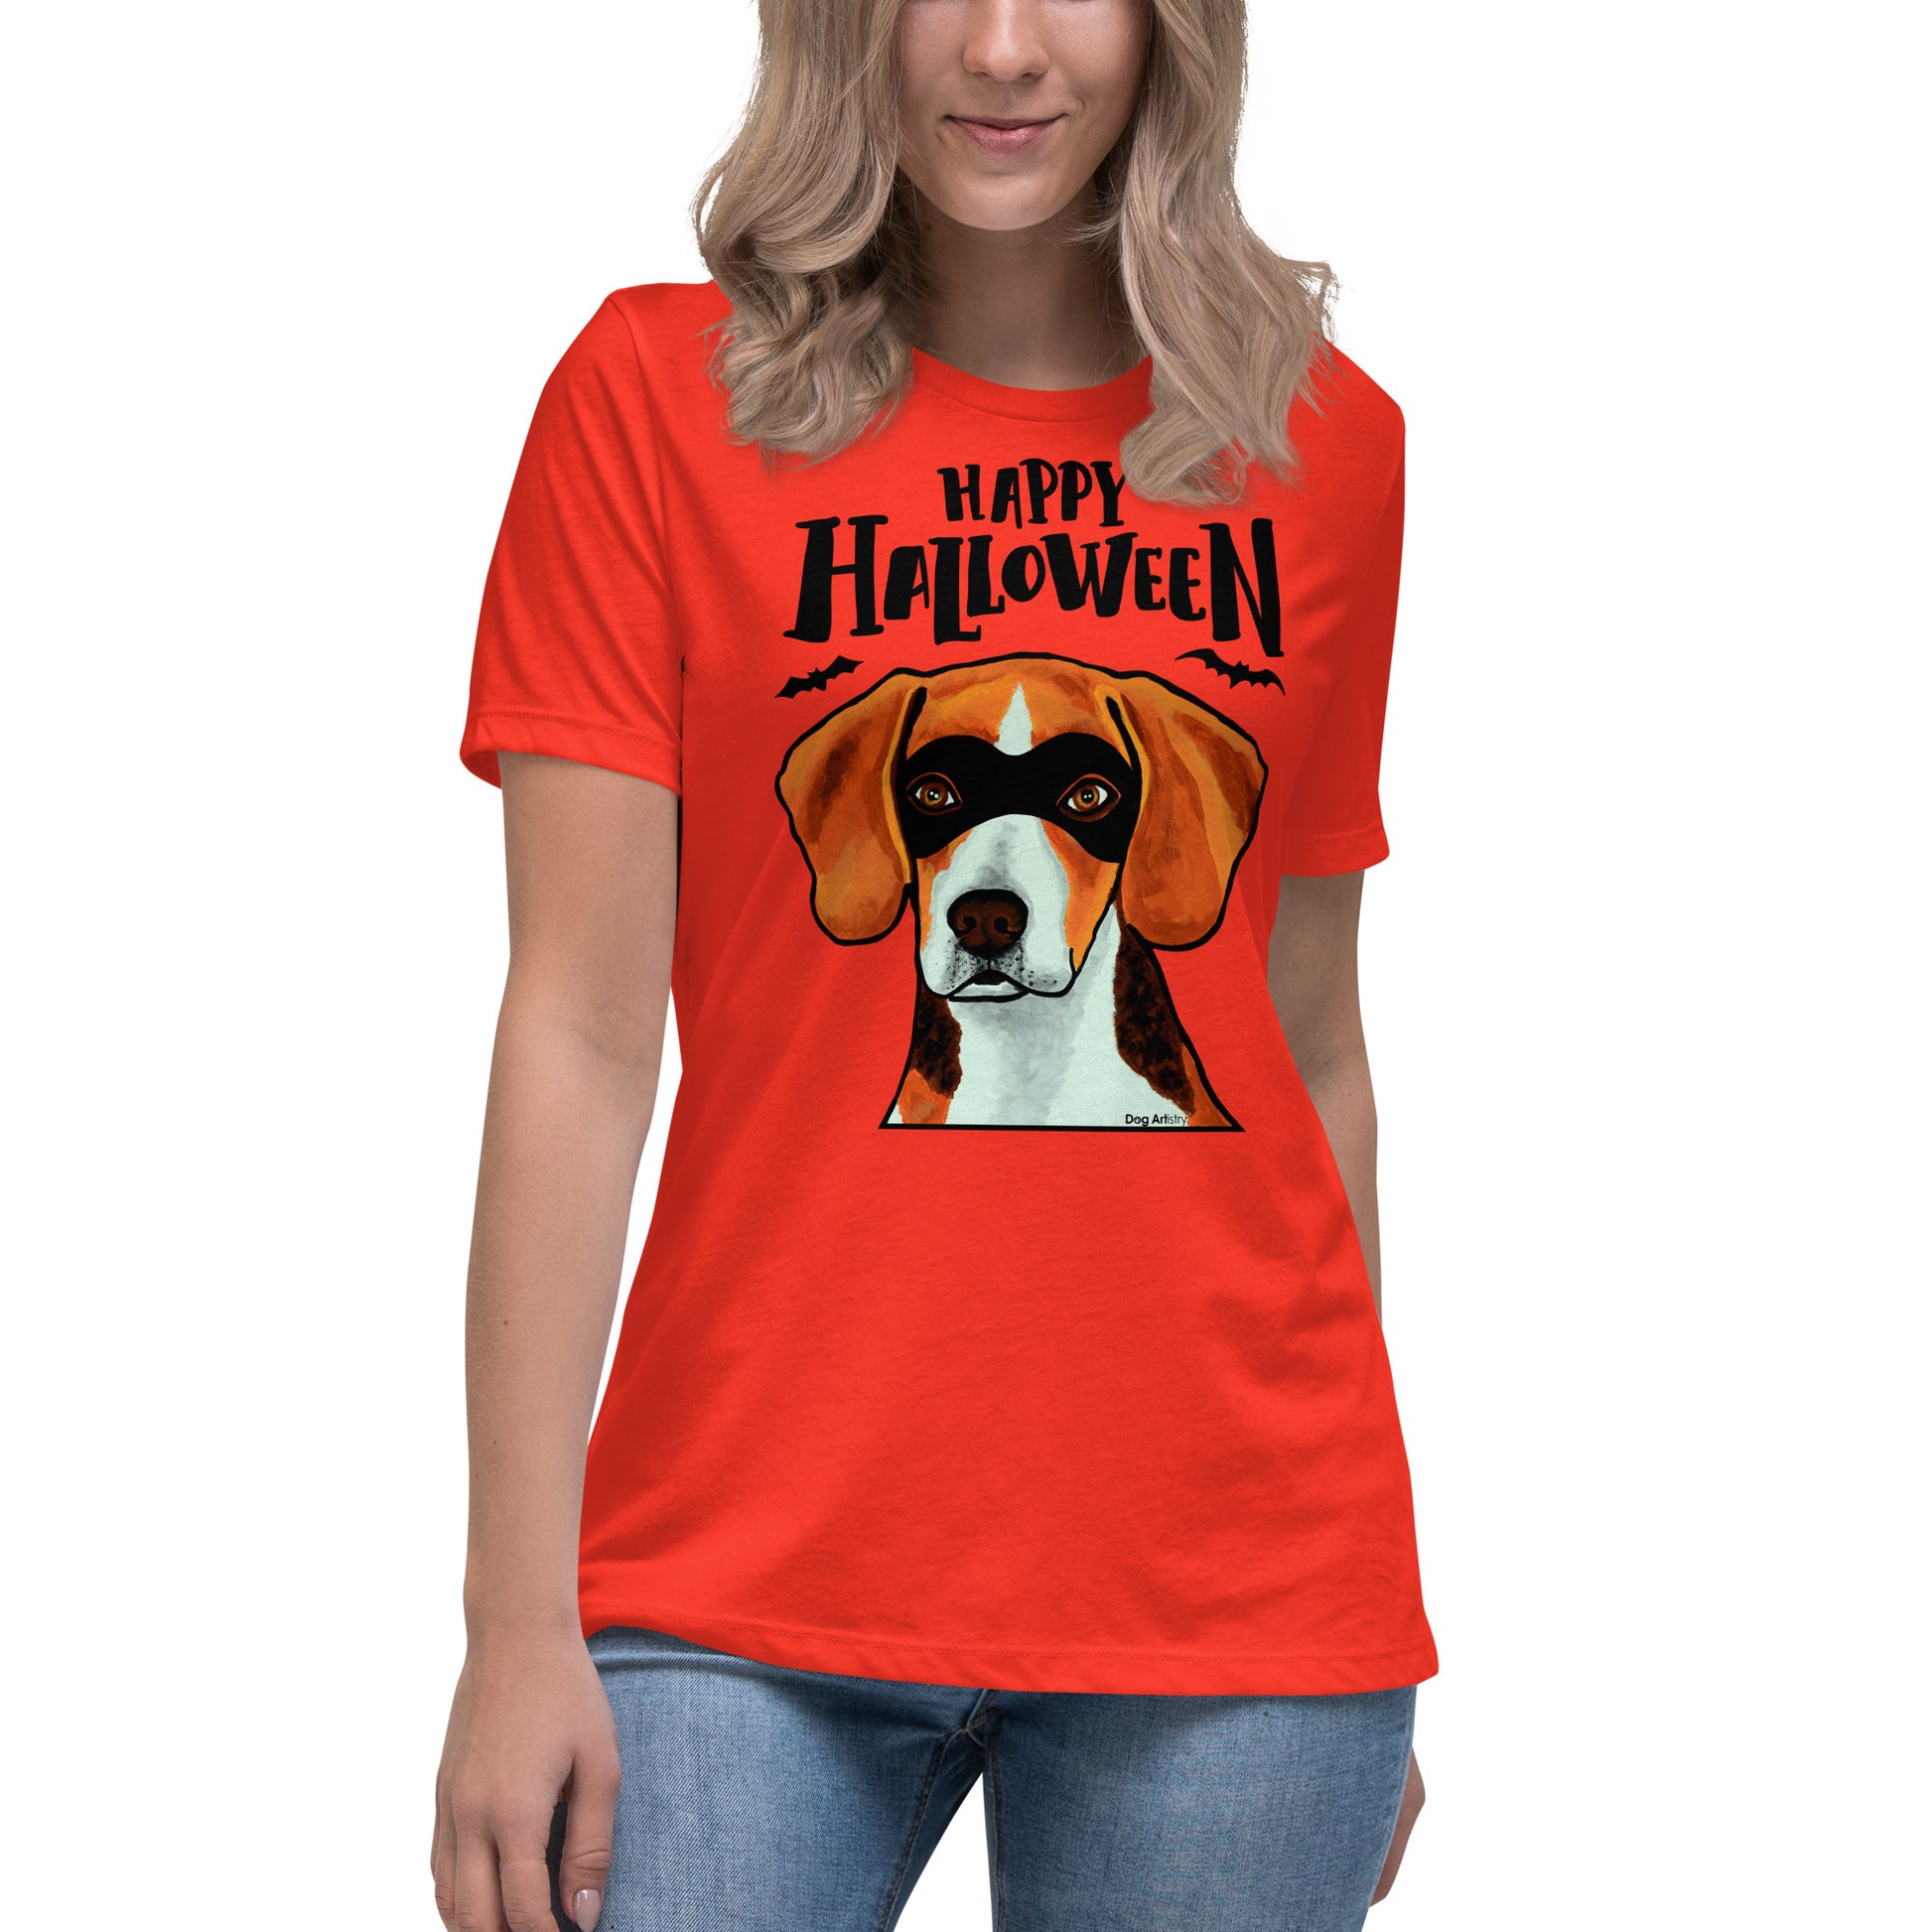 Funny Happy Halloween Beagle wearing mask women’s poppy t-shirt by Dog Artistry.